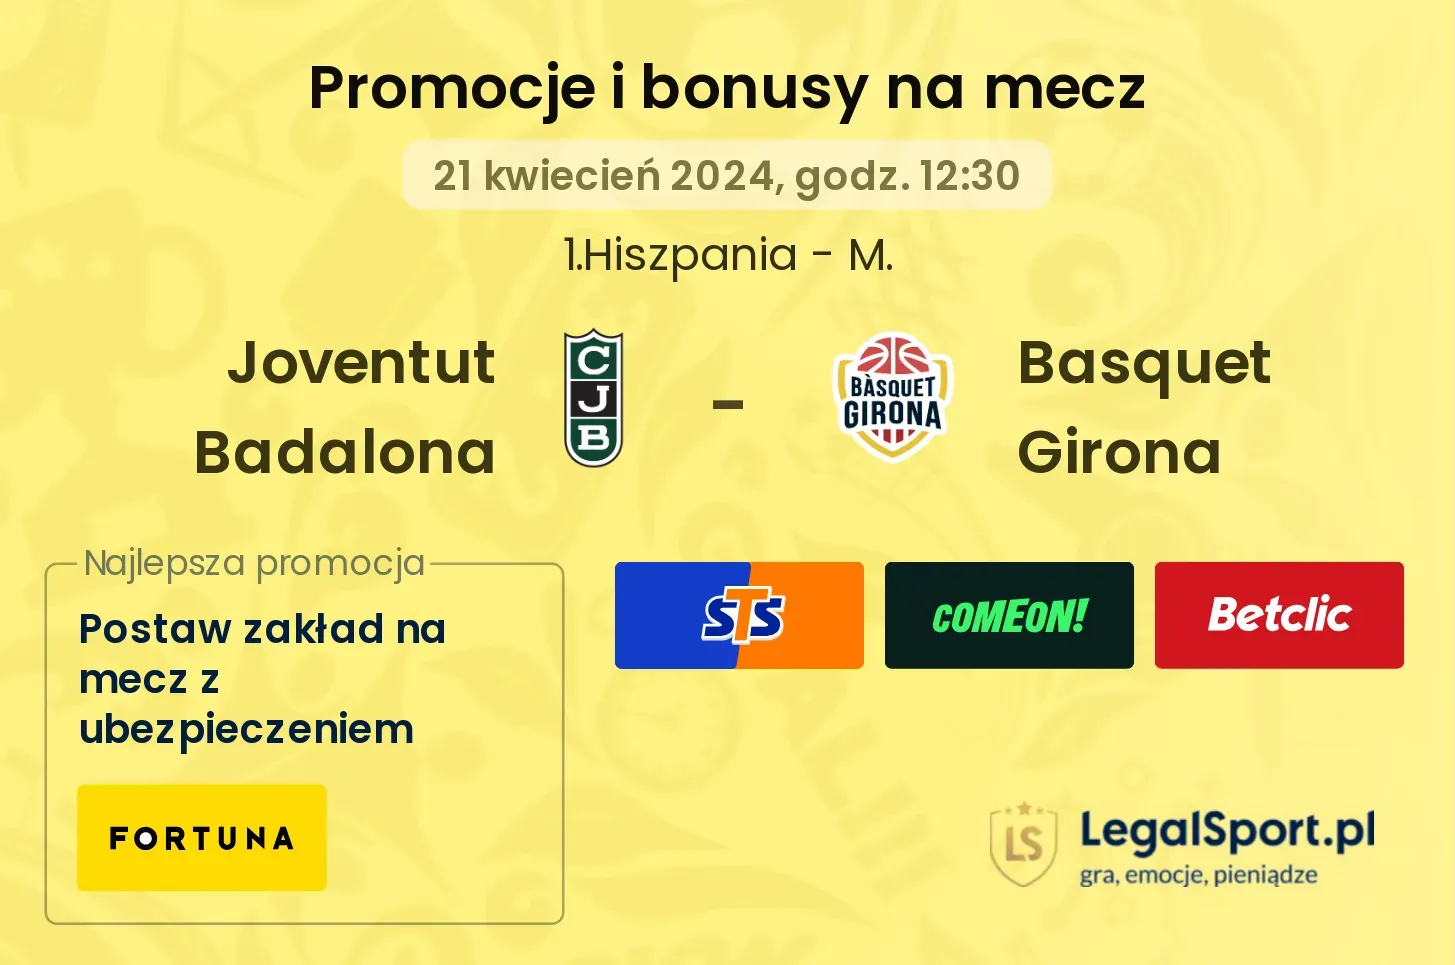 Joventut Badalona - Basquet Girona promocje bonusy na mecz